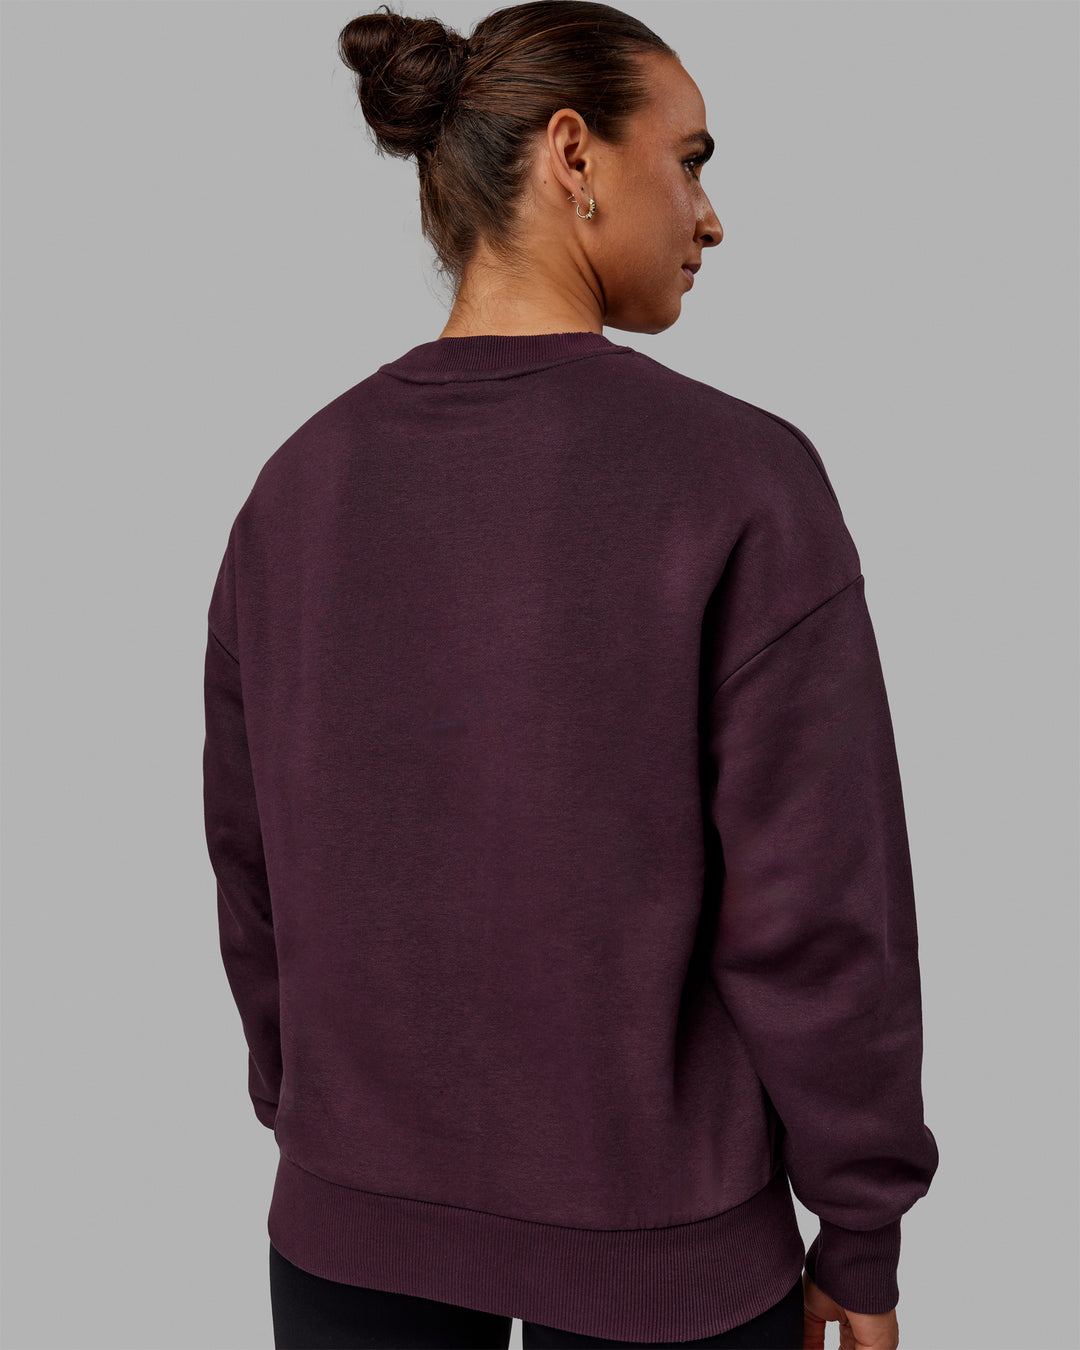 Woman wearing Unisex 1% Better Sweater Oversize - Midnight Plum